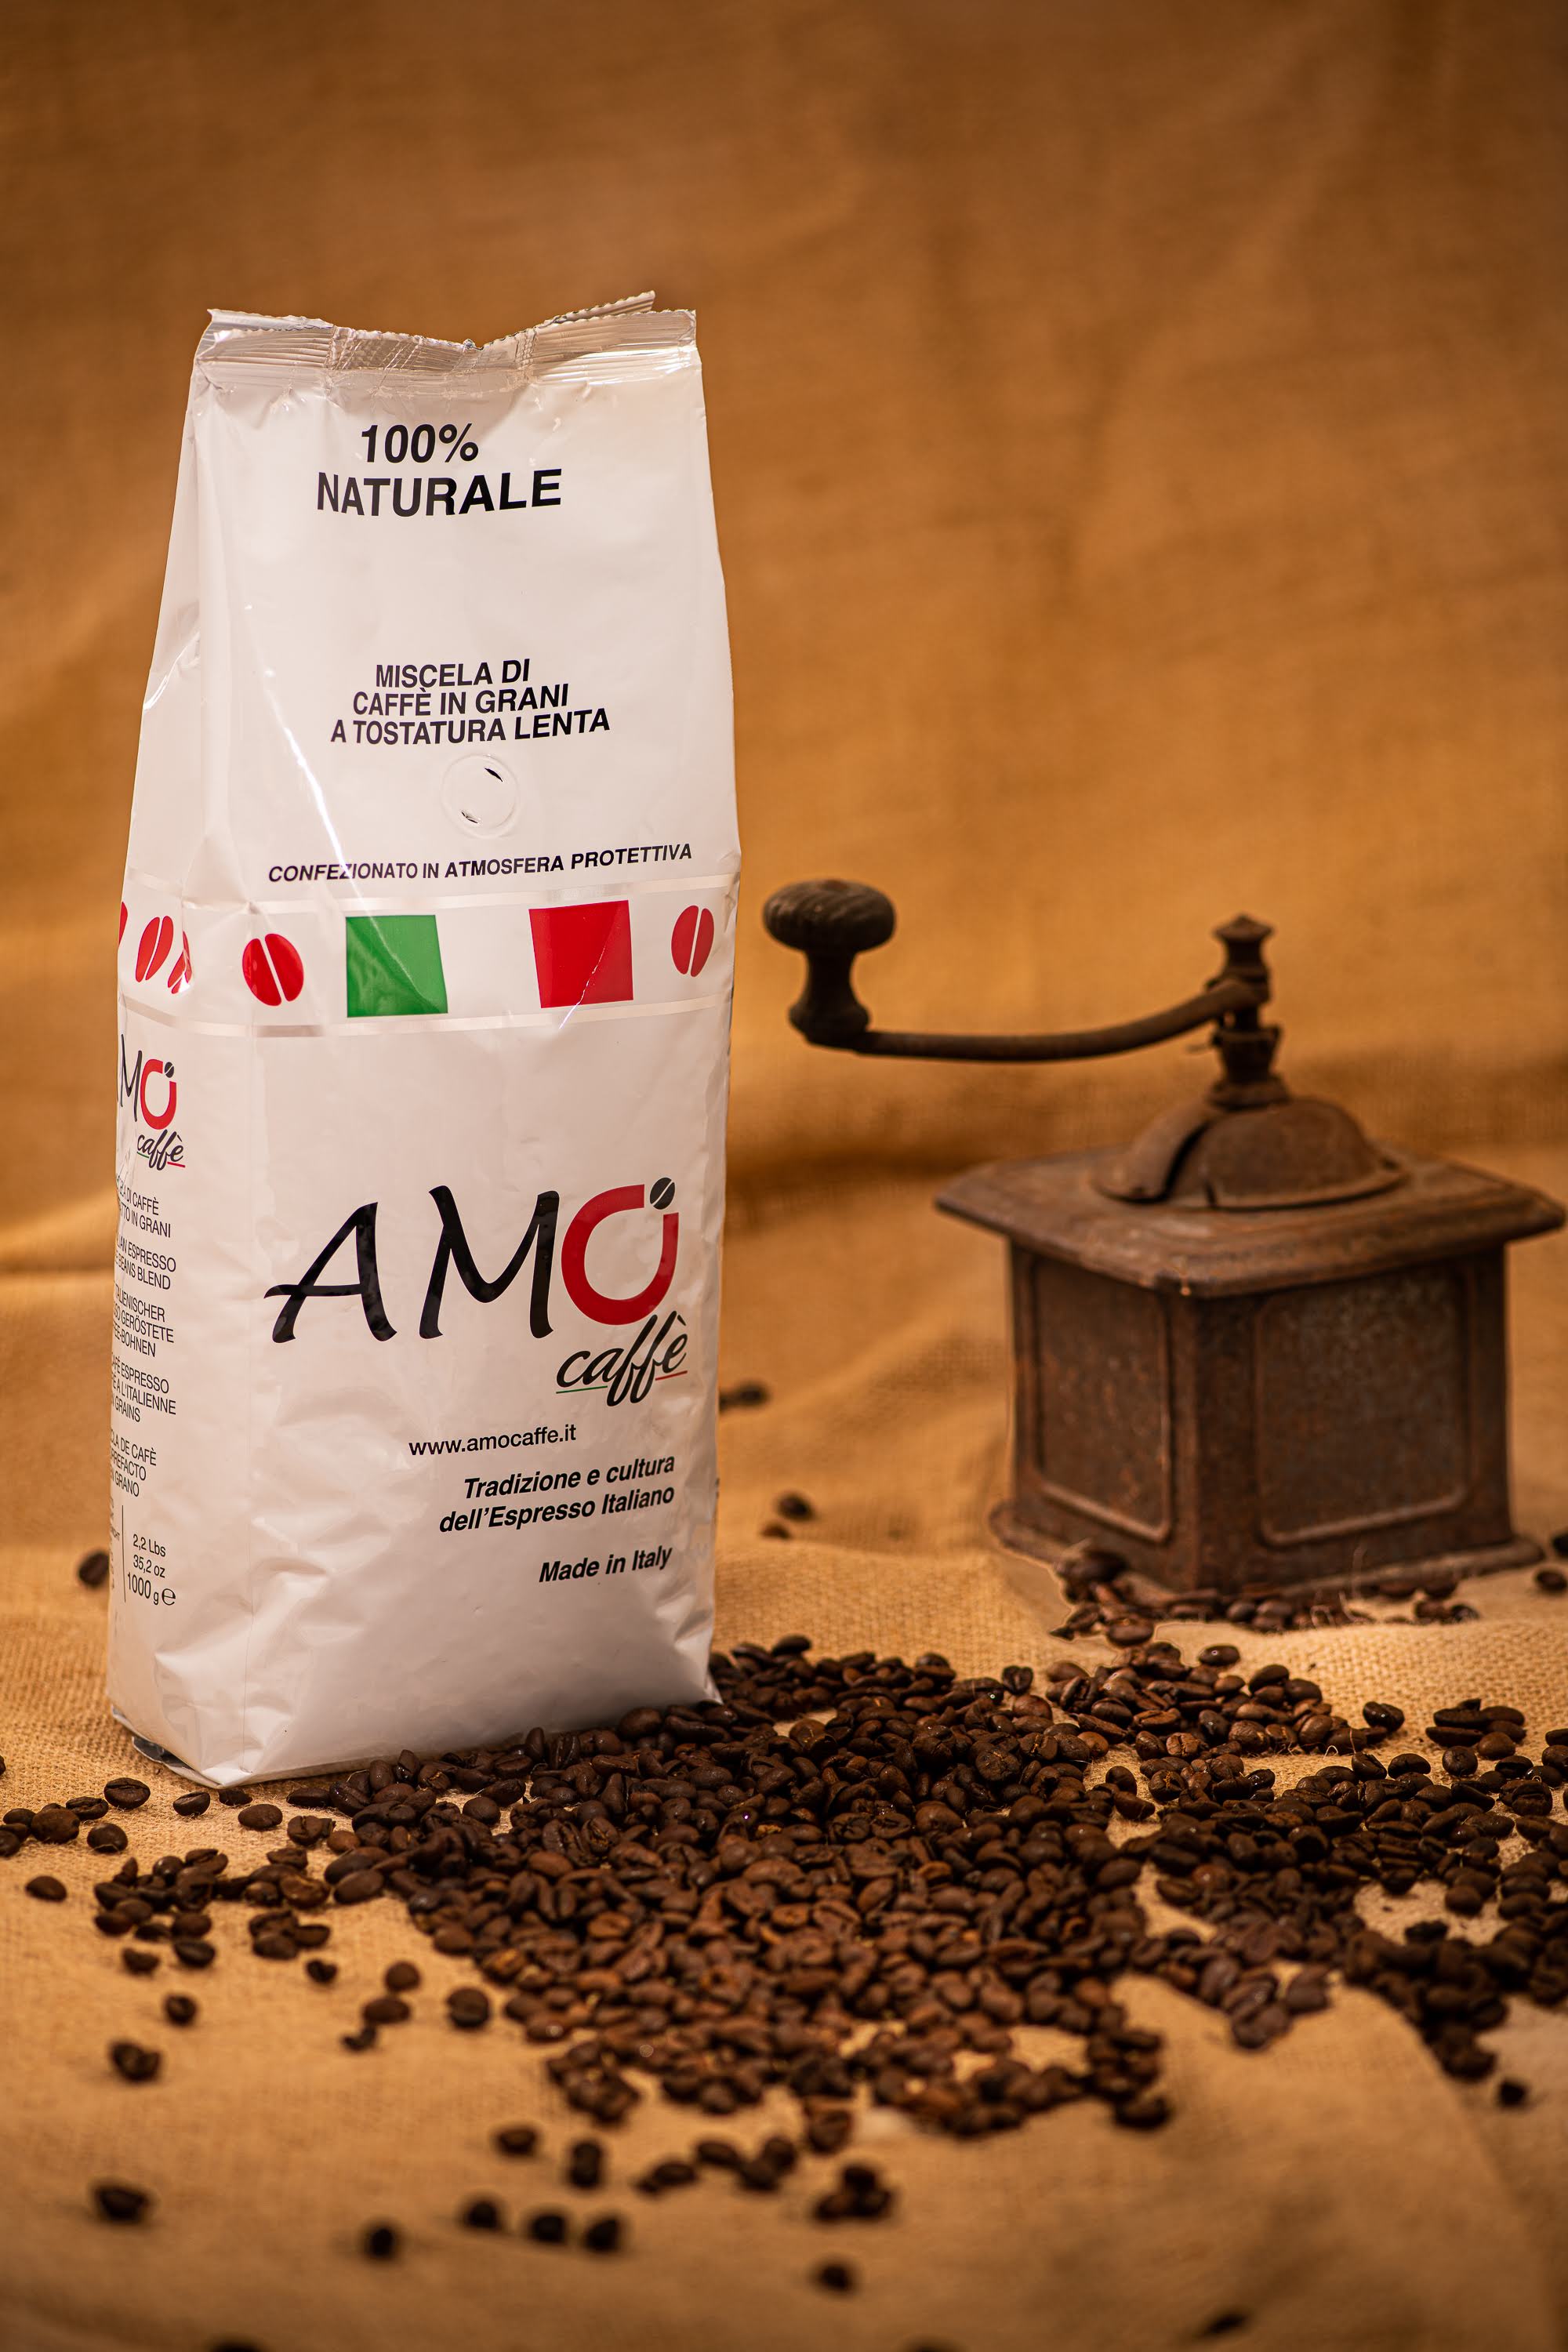 AMO CAFFE MISCELA ORO SPECIALE - MISCELA DI CAFFE IN GRANI A TOSTATURA LENTA